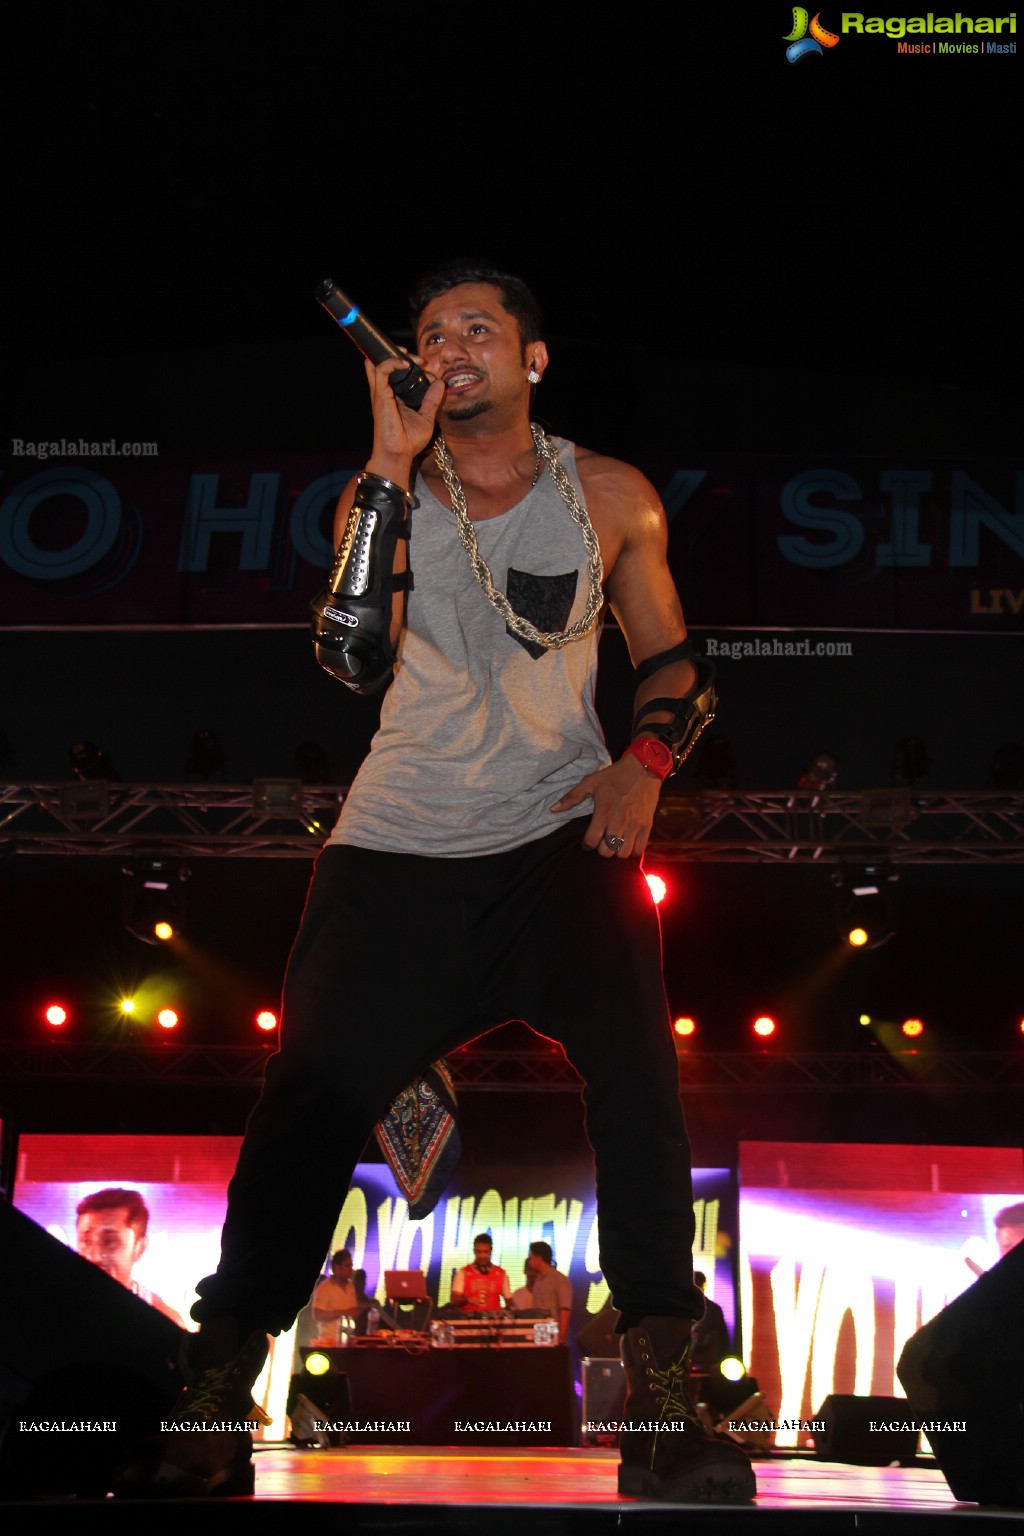 YoYo Honey Singh Live in Concert